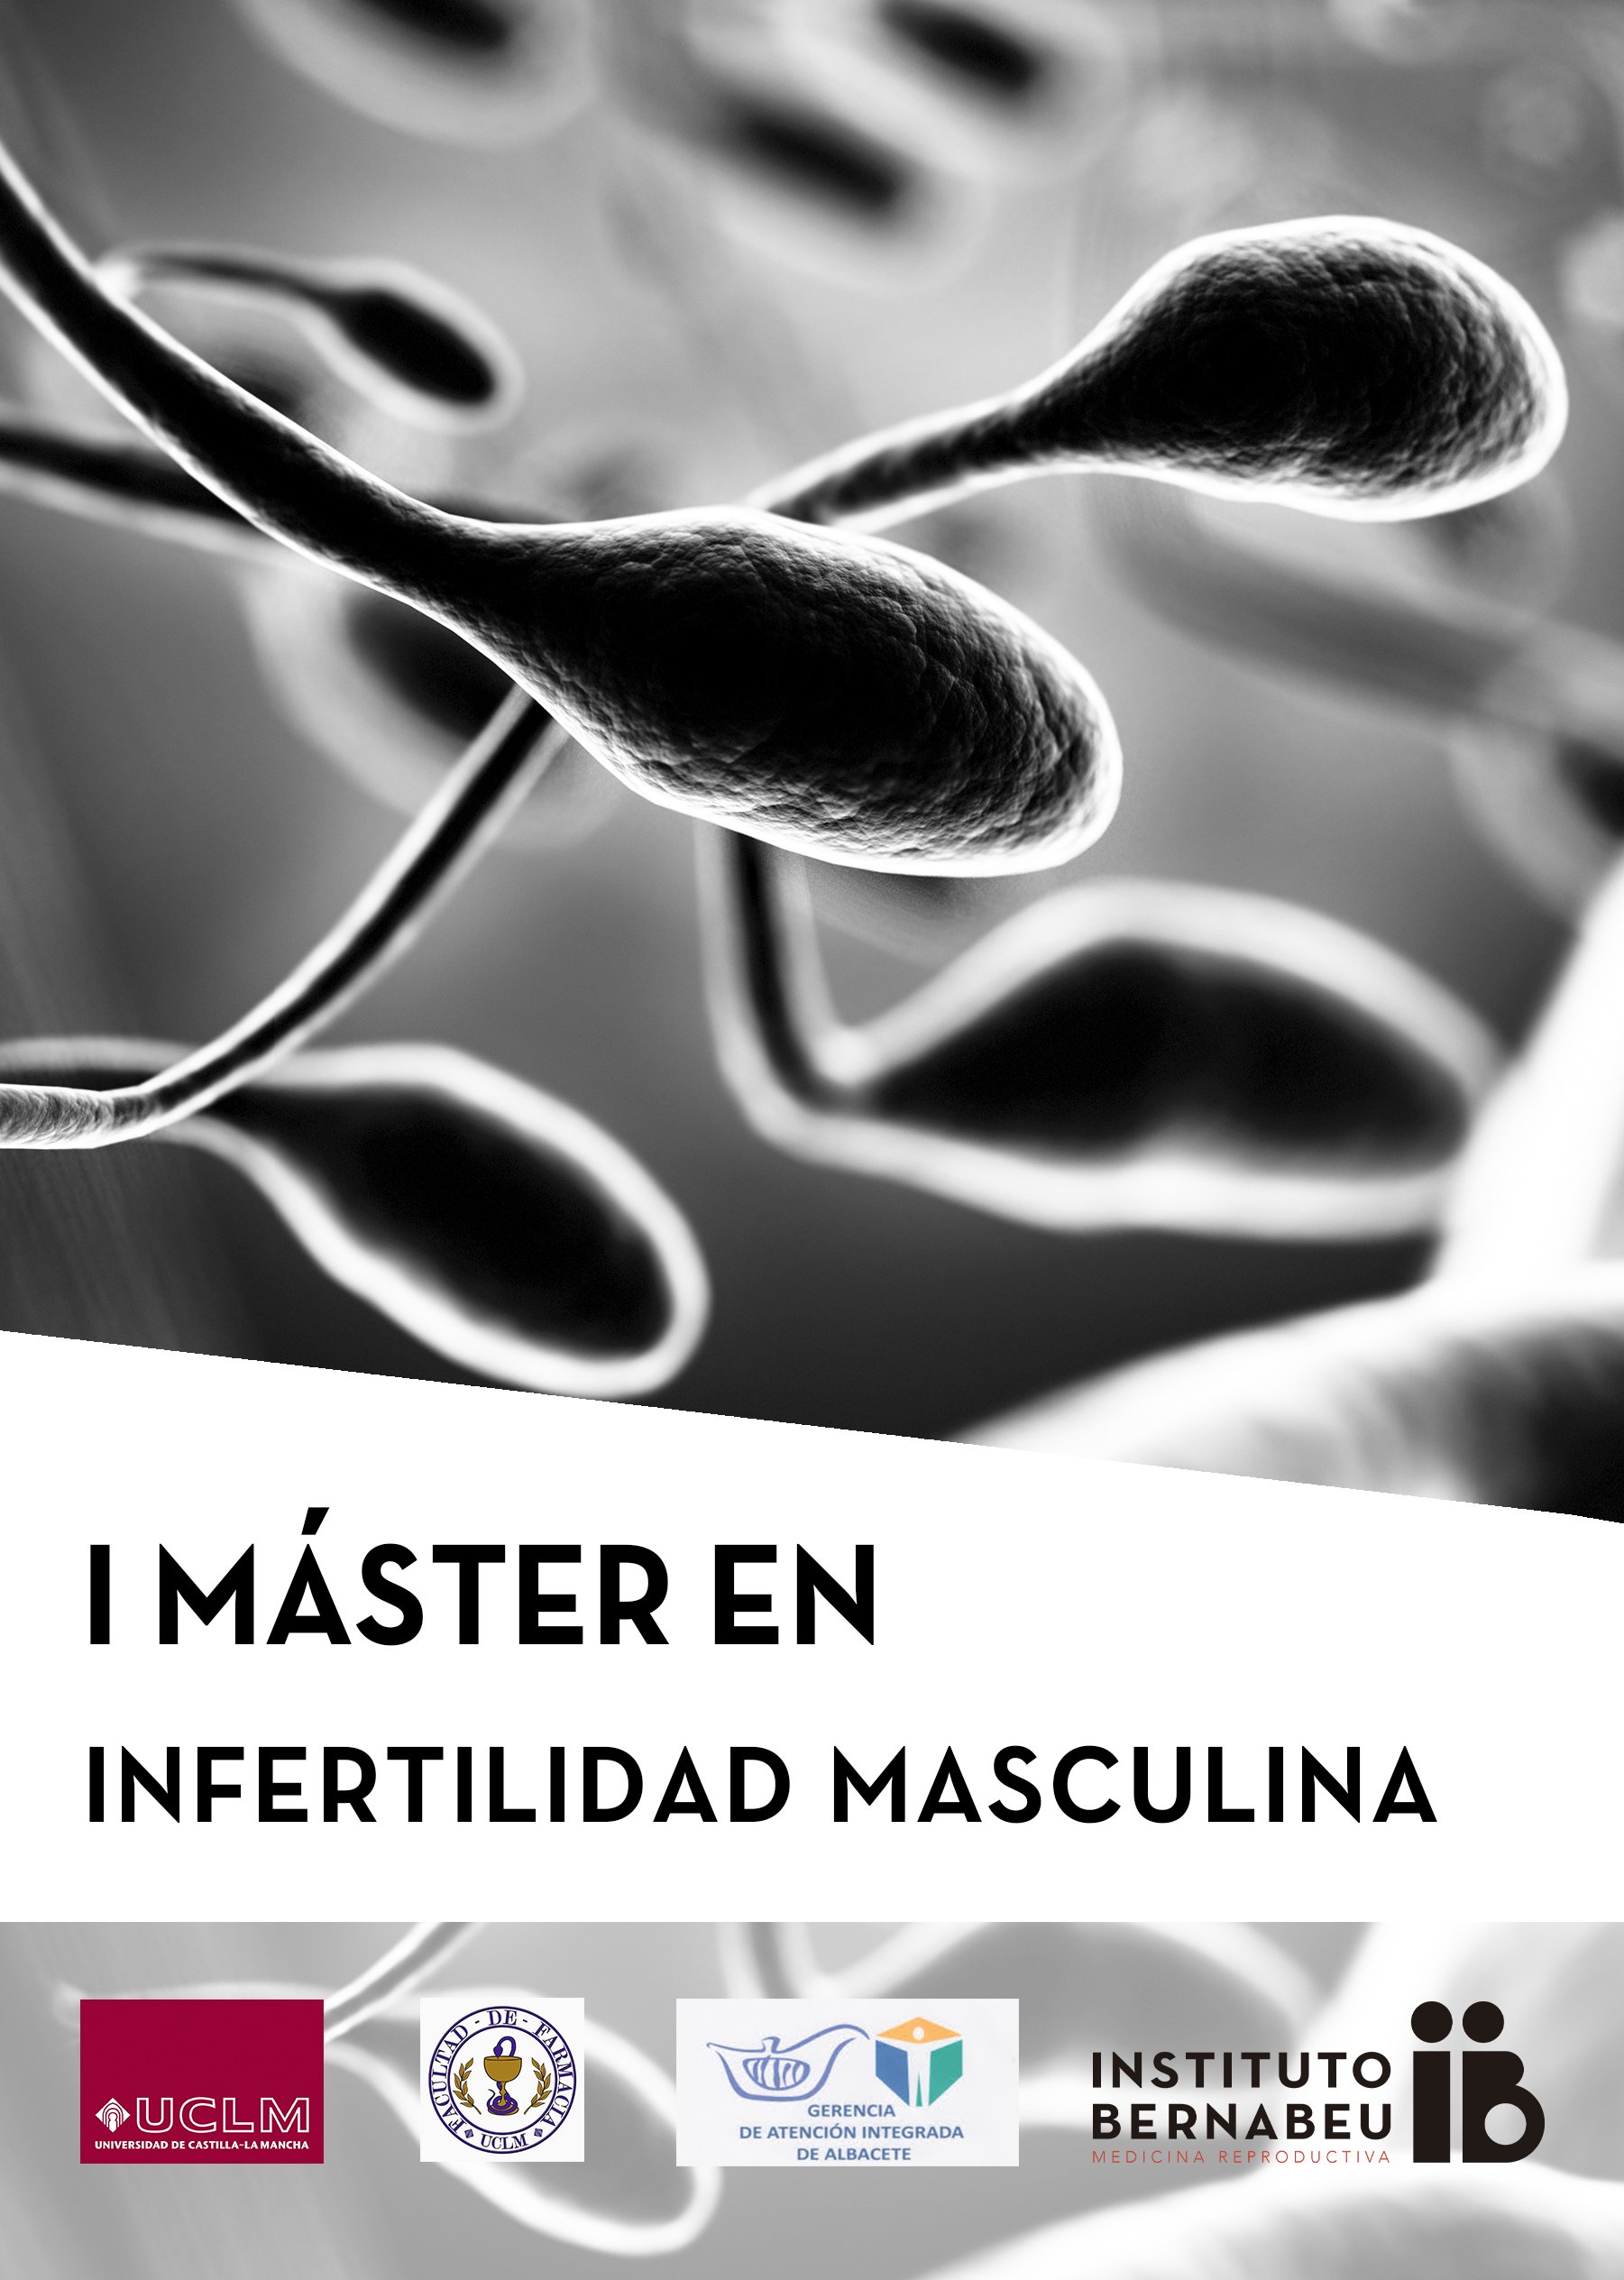 I Institute Bernabeu – Universitetet i Castilla-La Mancha I Master i mannlig infertilitet